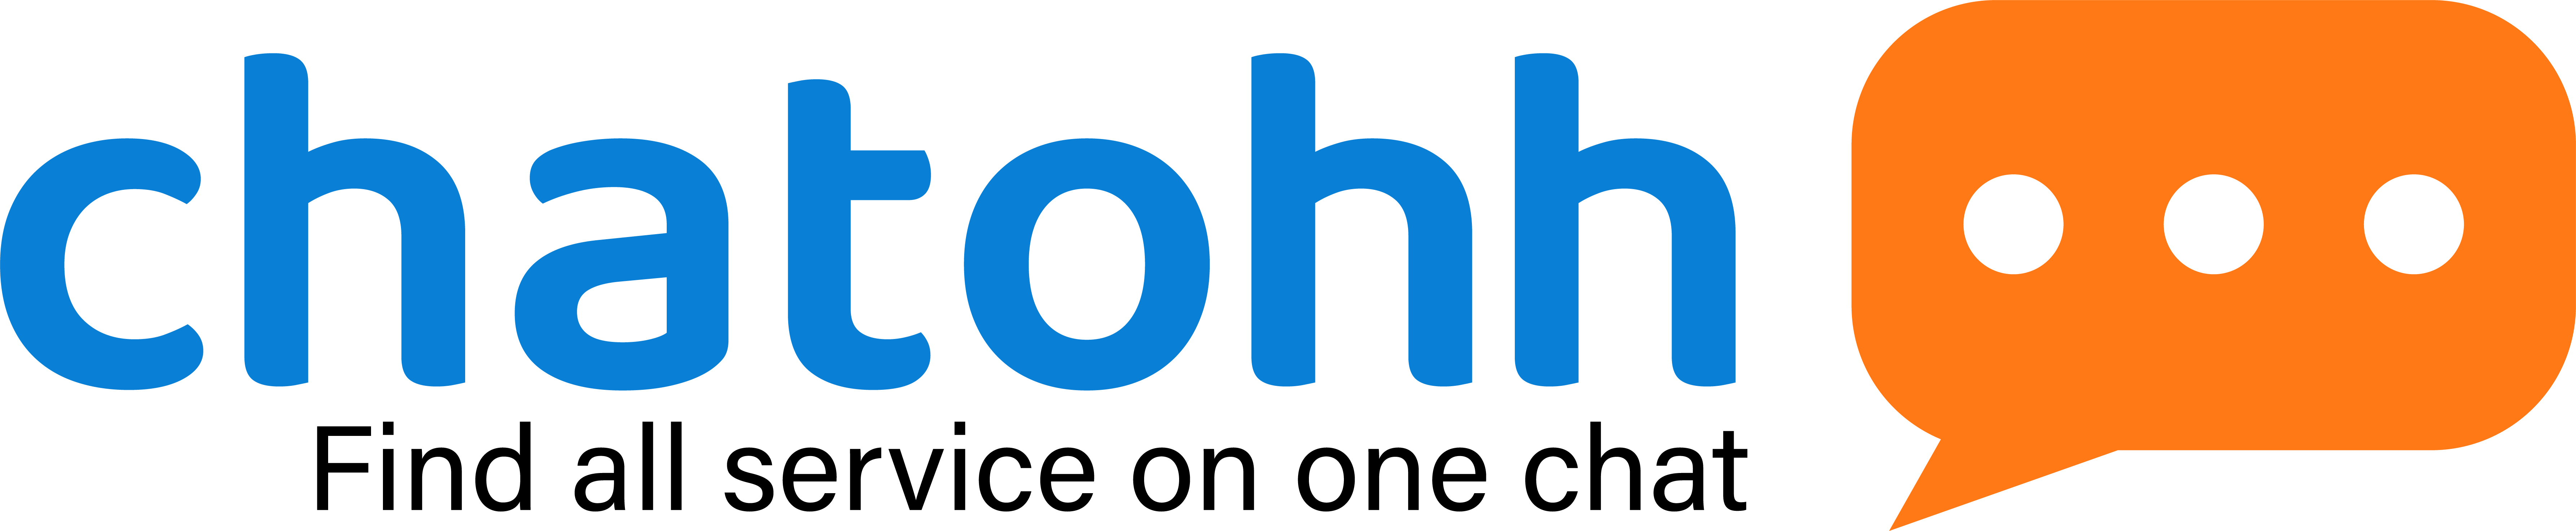 chatohh logo